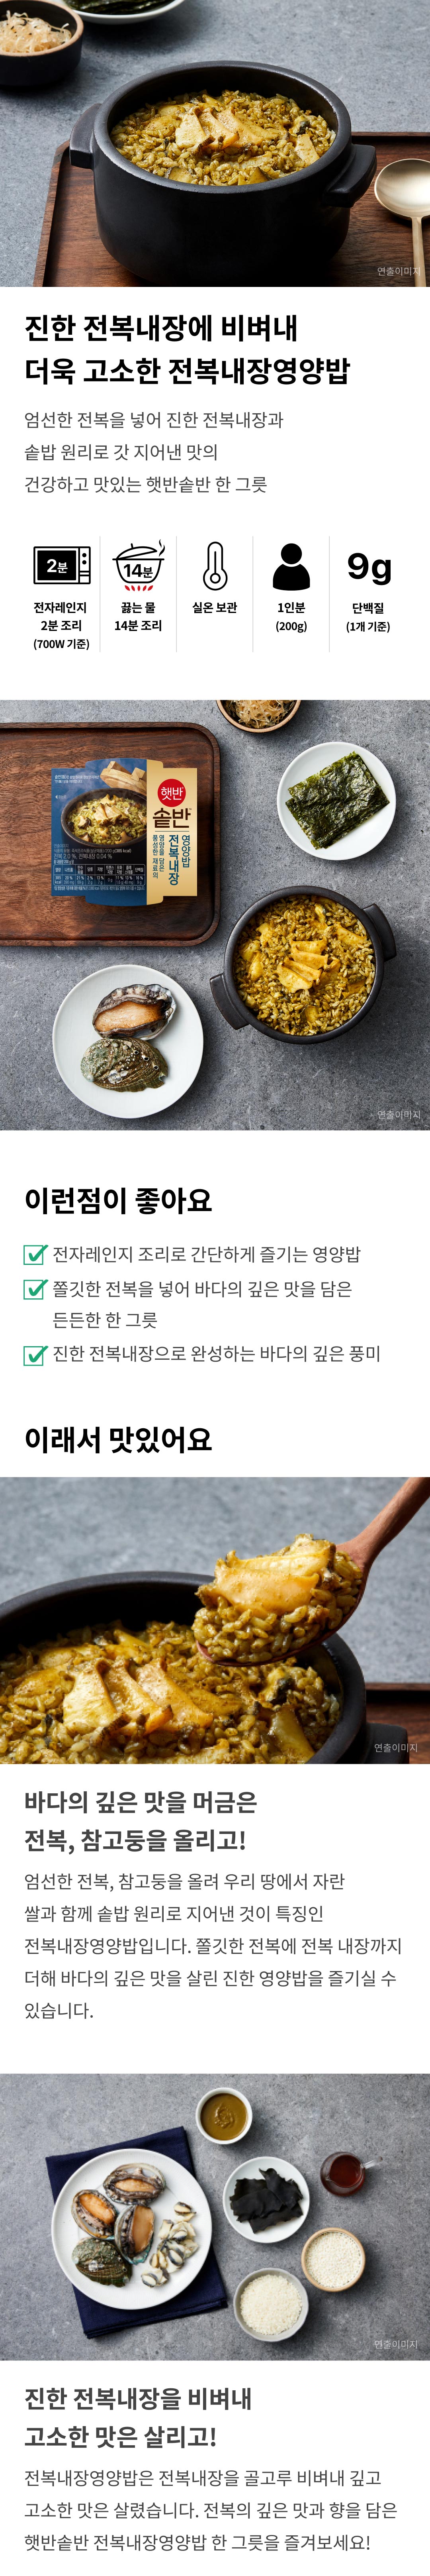 CJ 본사직영] 햇반솥반 전 제품(9종) 맛보기 체험팩 (5/7이후순차출…